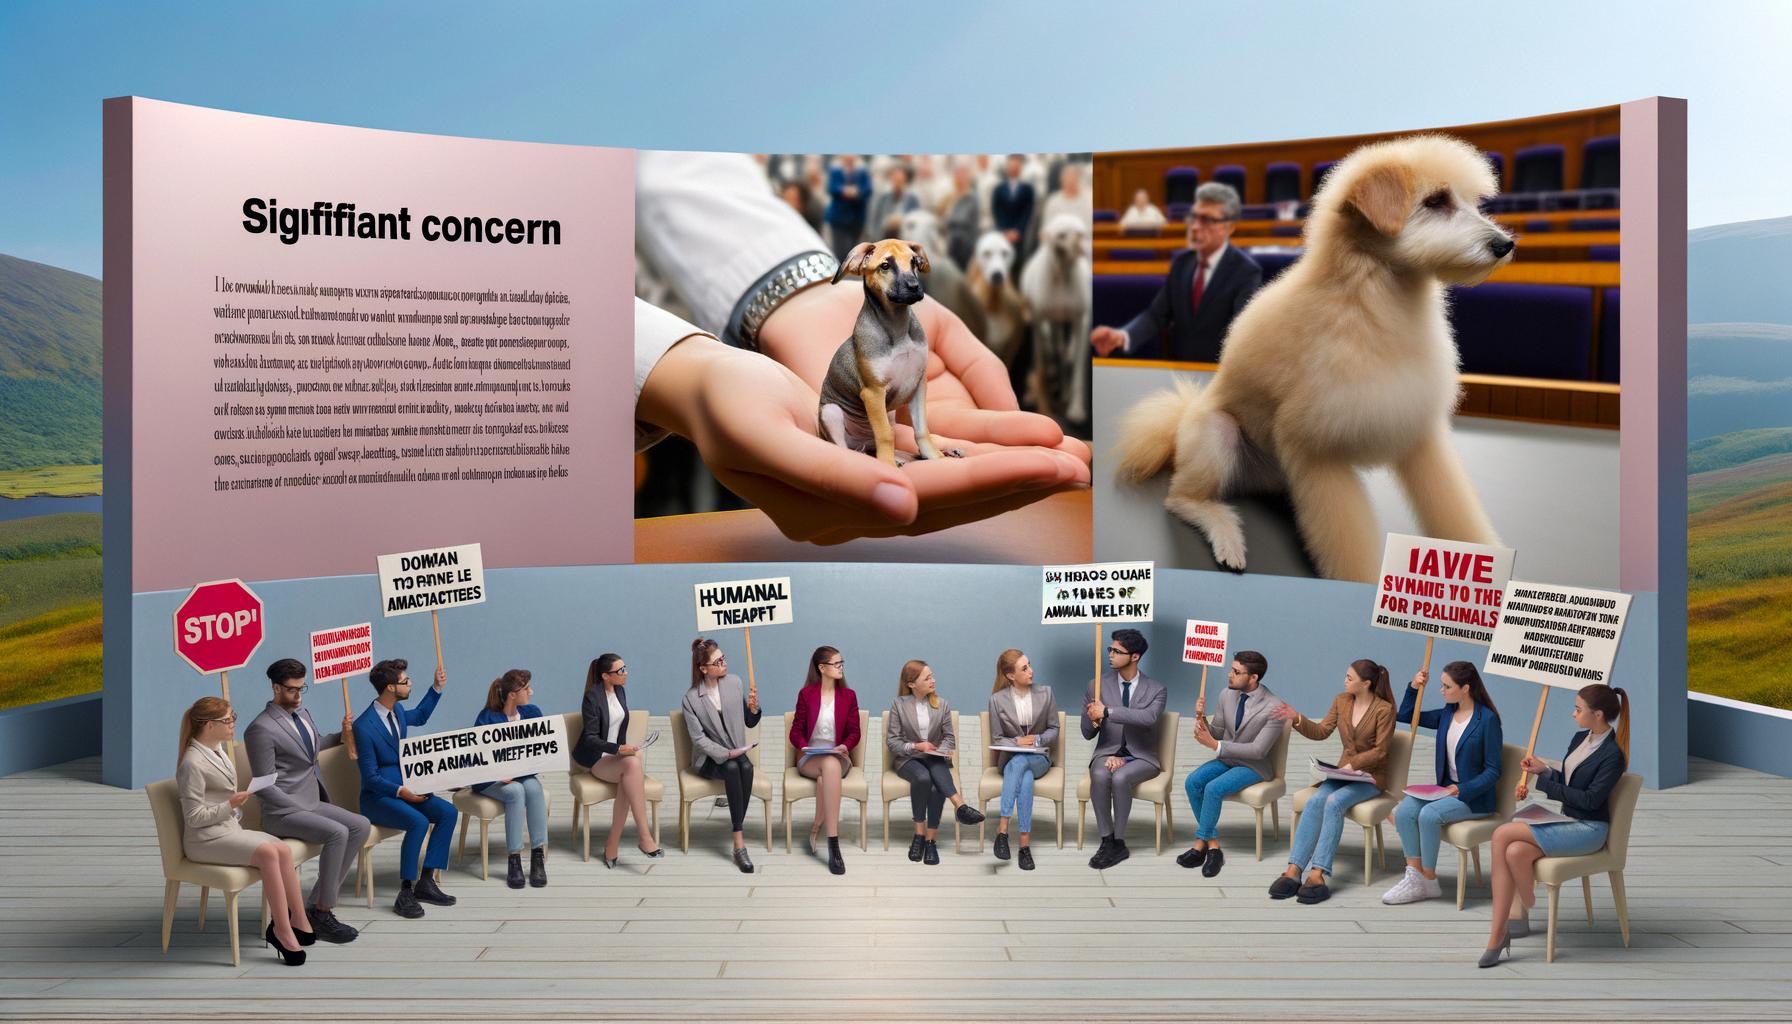 Public concern over animal welfare sparks debate and regulatory scrutiny.